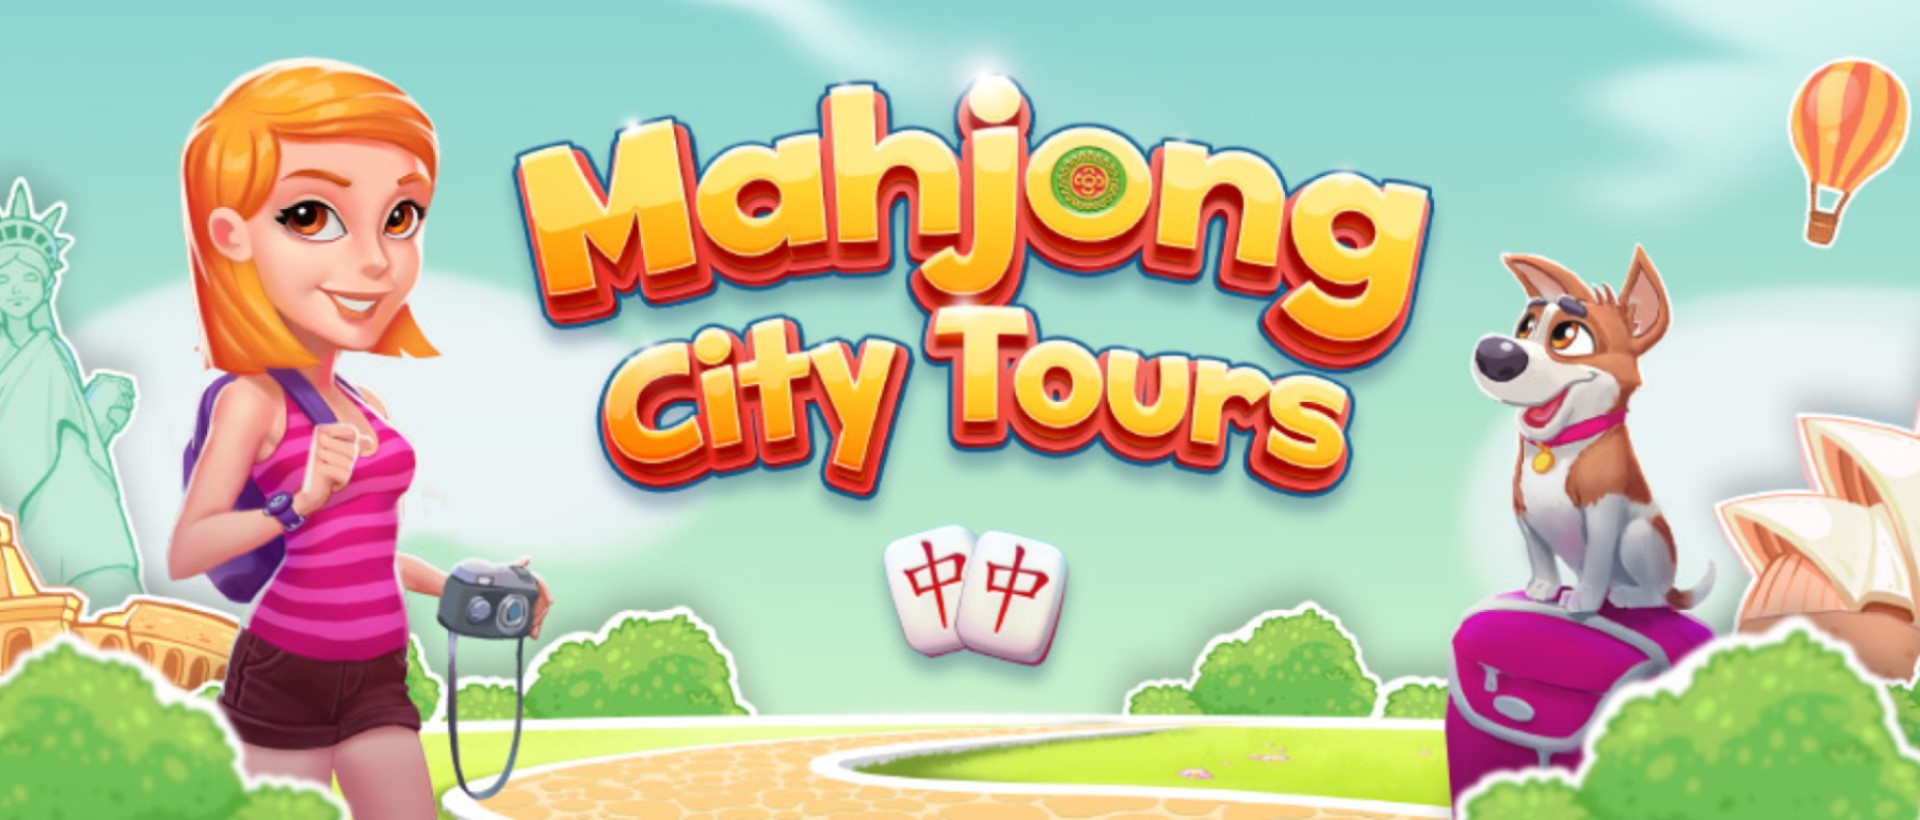 Download Mahjong City Tours Free Mahjong Classic Game on